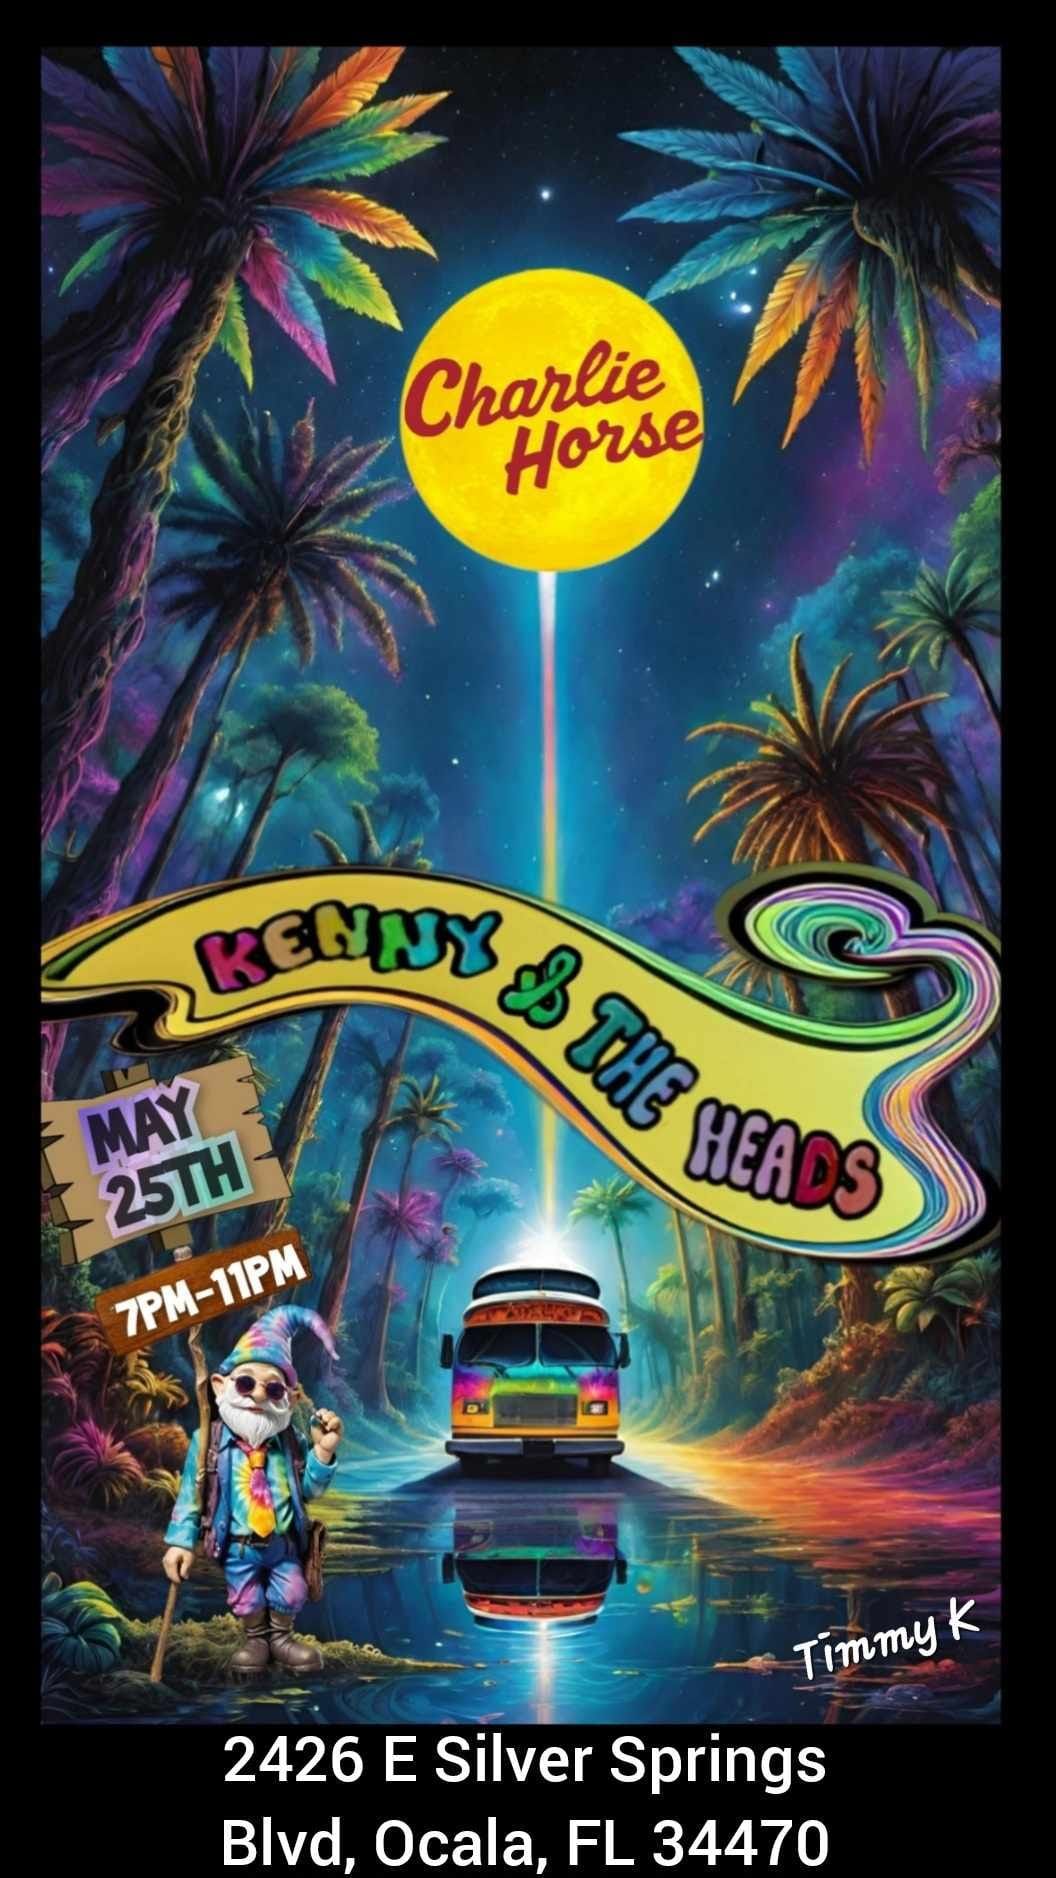 Kenny & The Heads LIVE @ Charlie Horse - Ocala